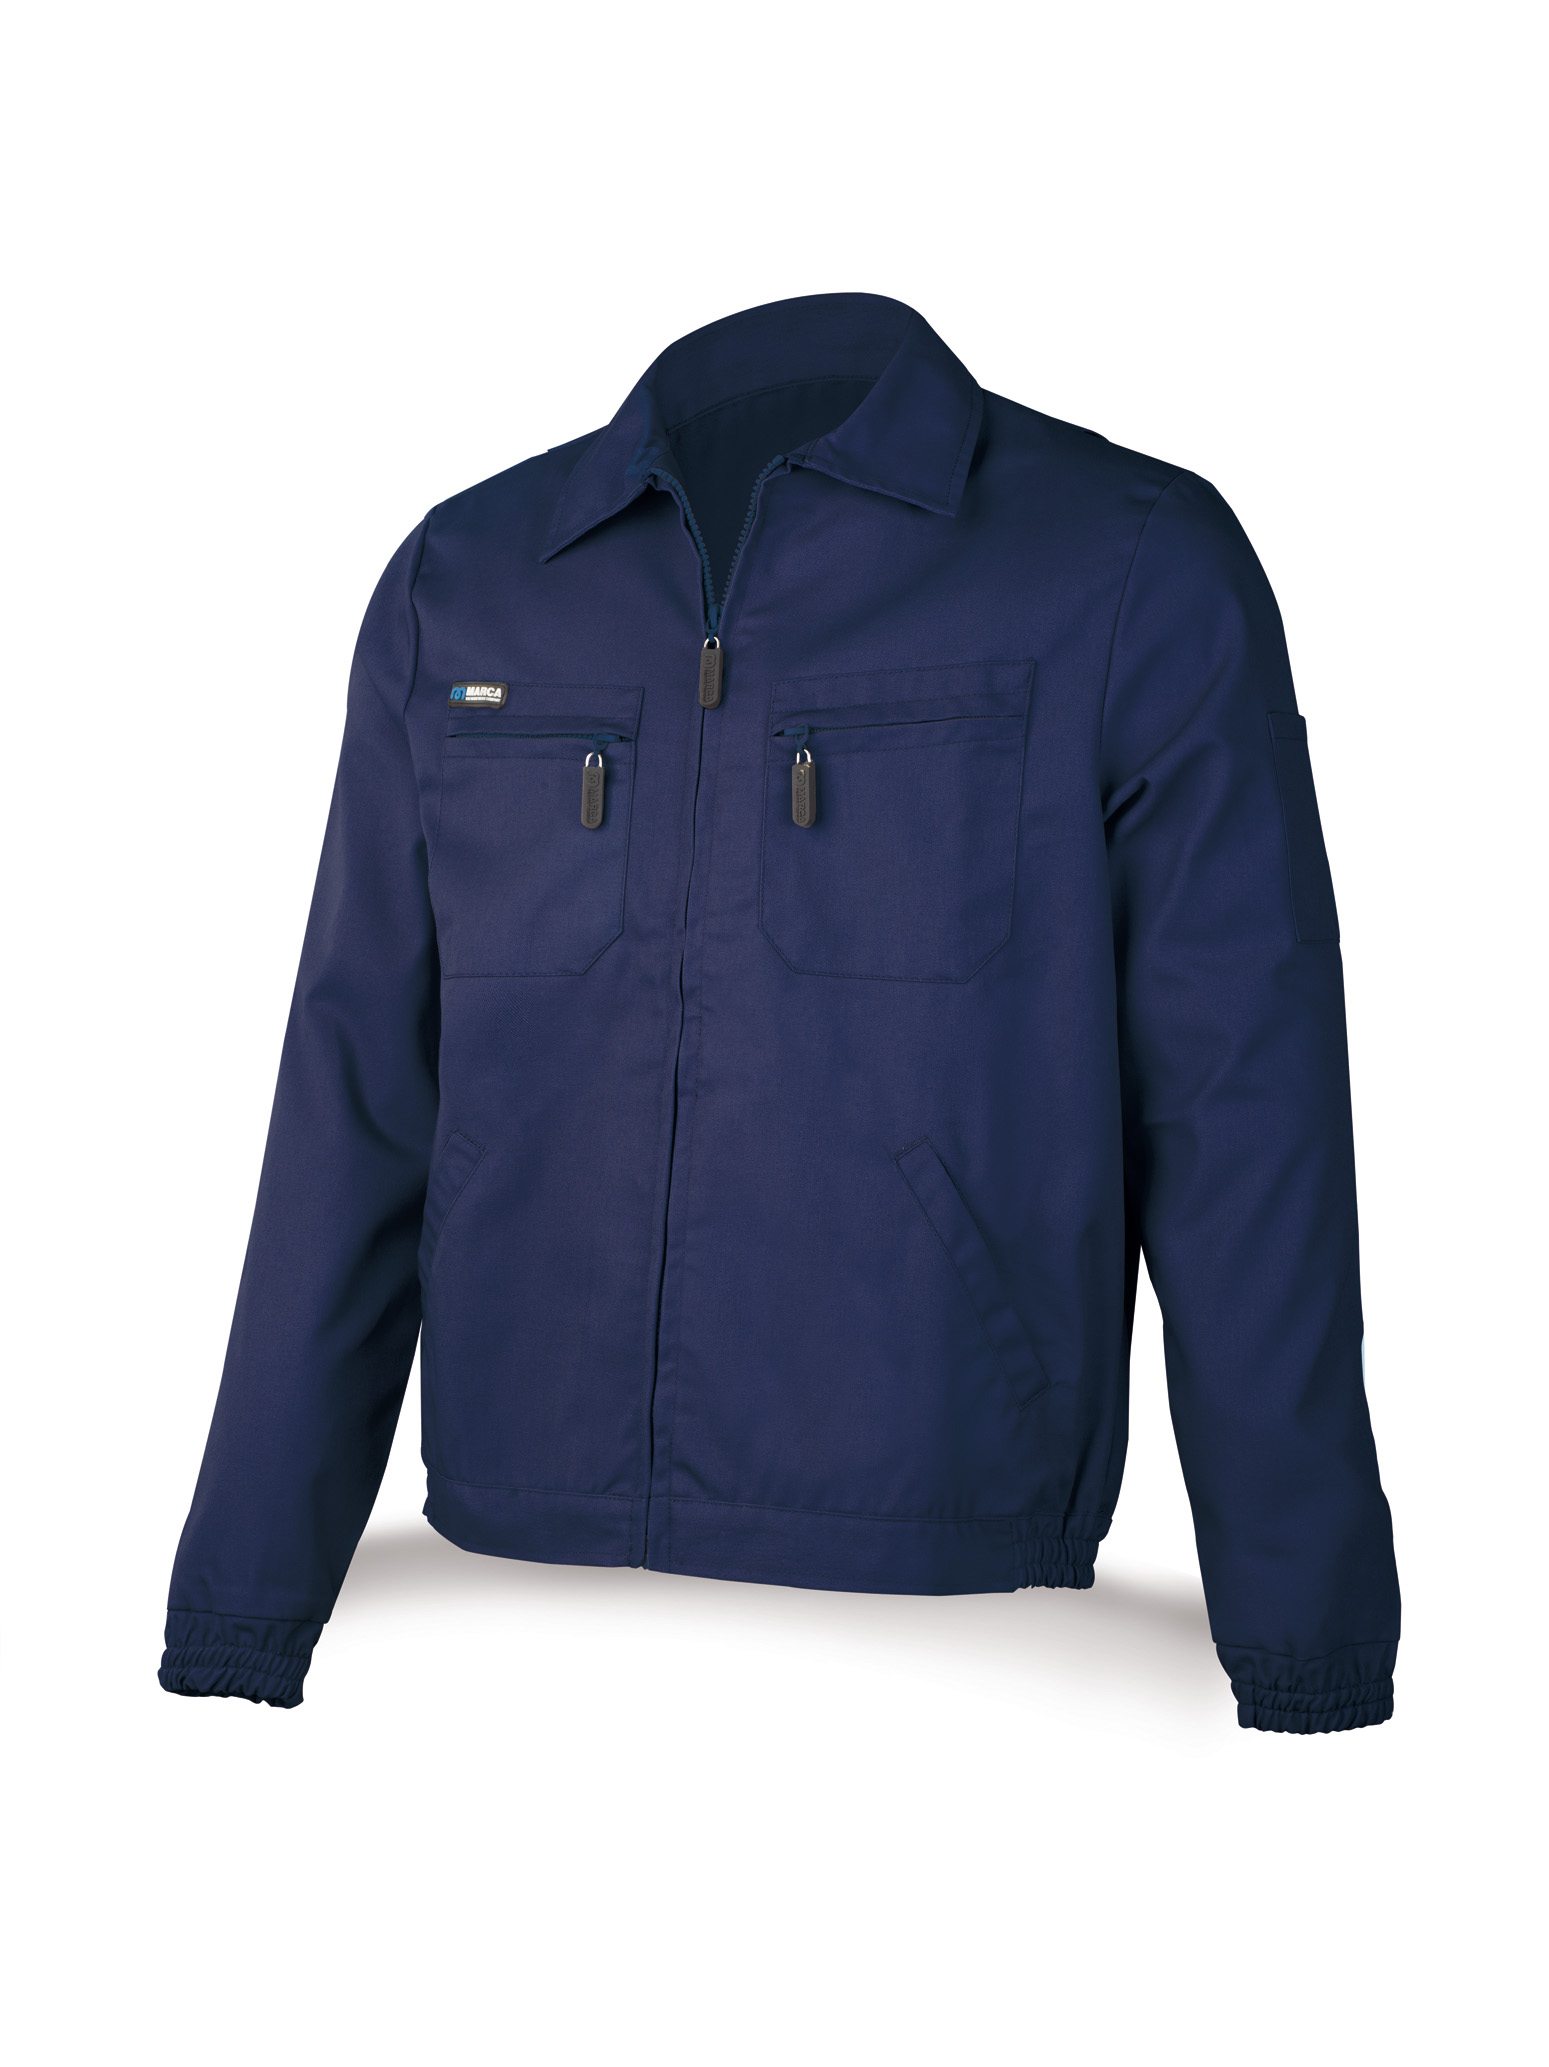 488-CTA Top Workwear Top Series Tergal. Navy blue.